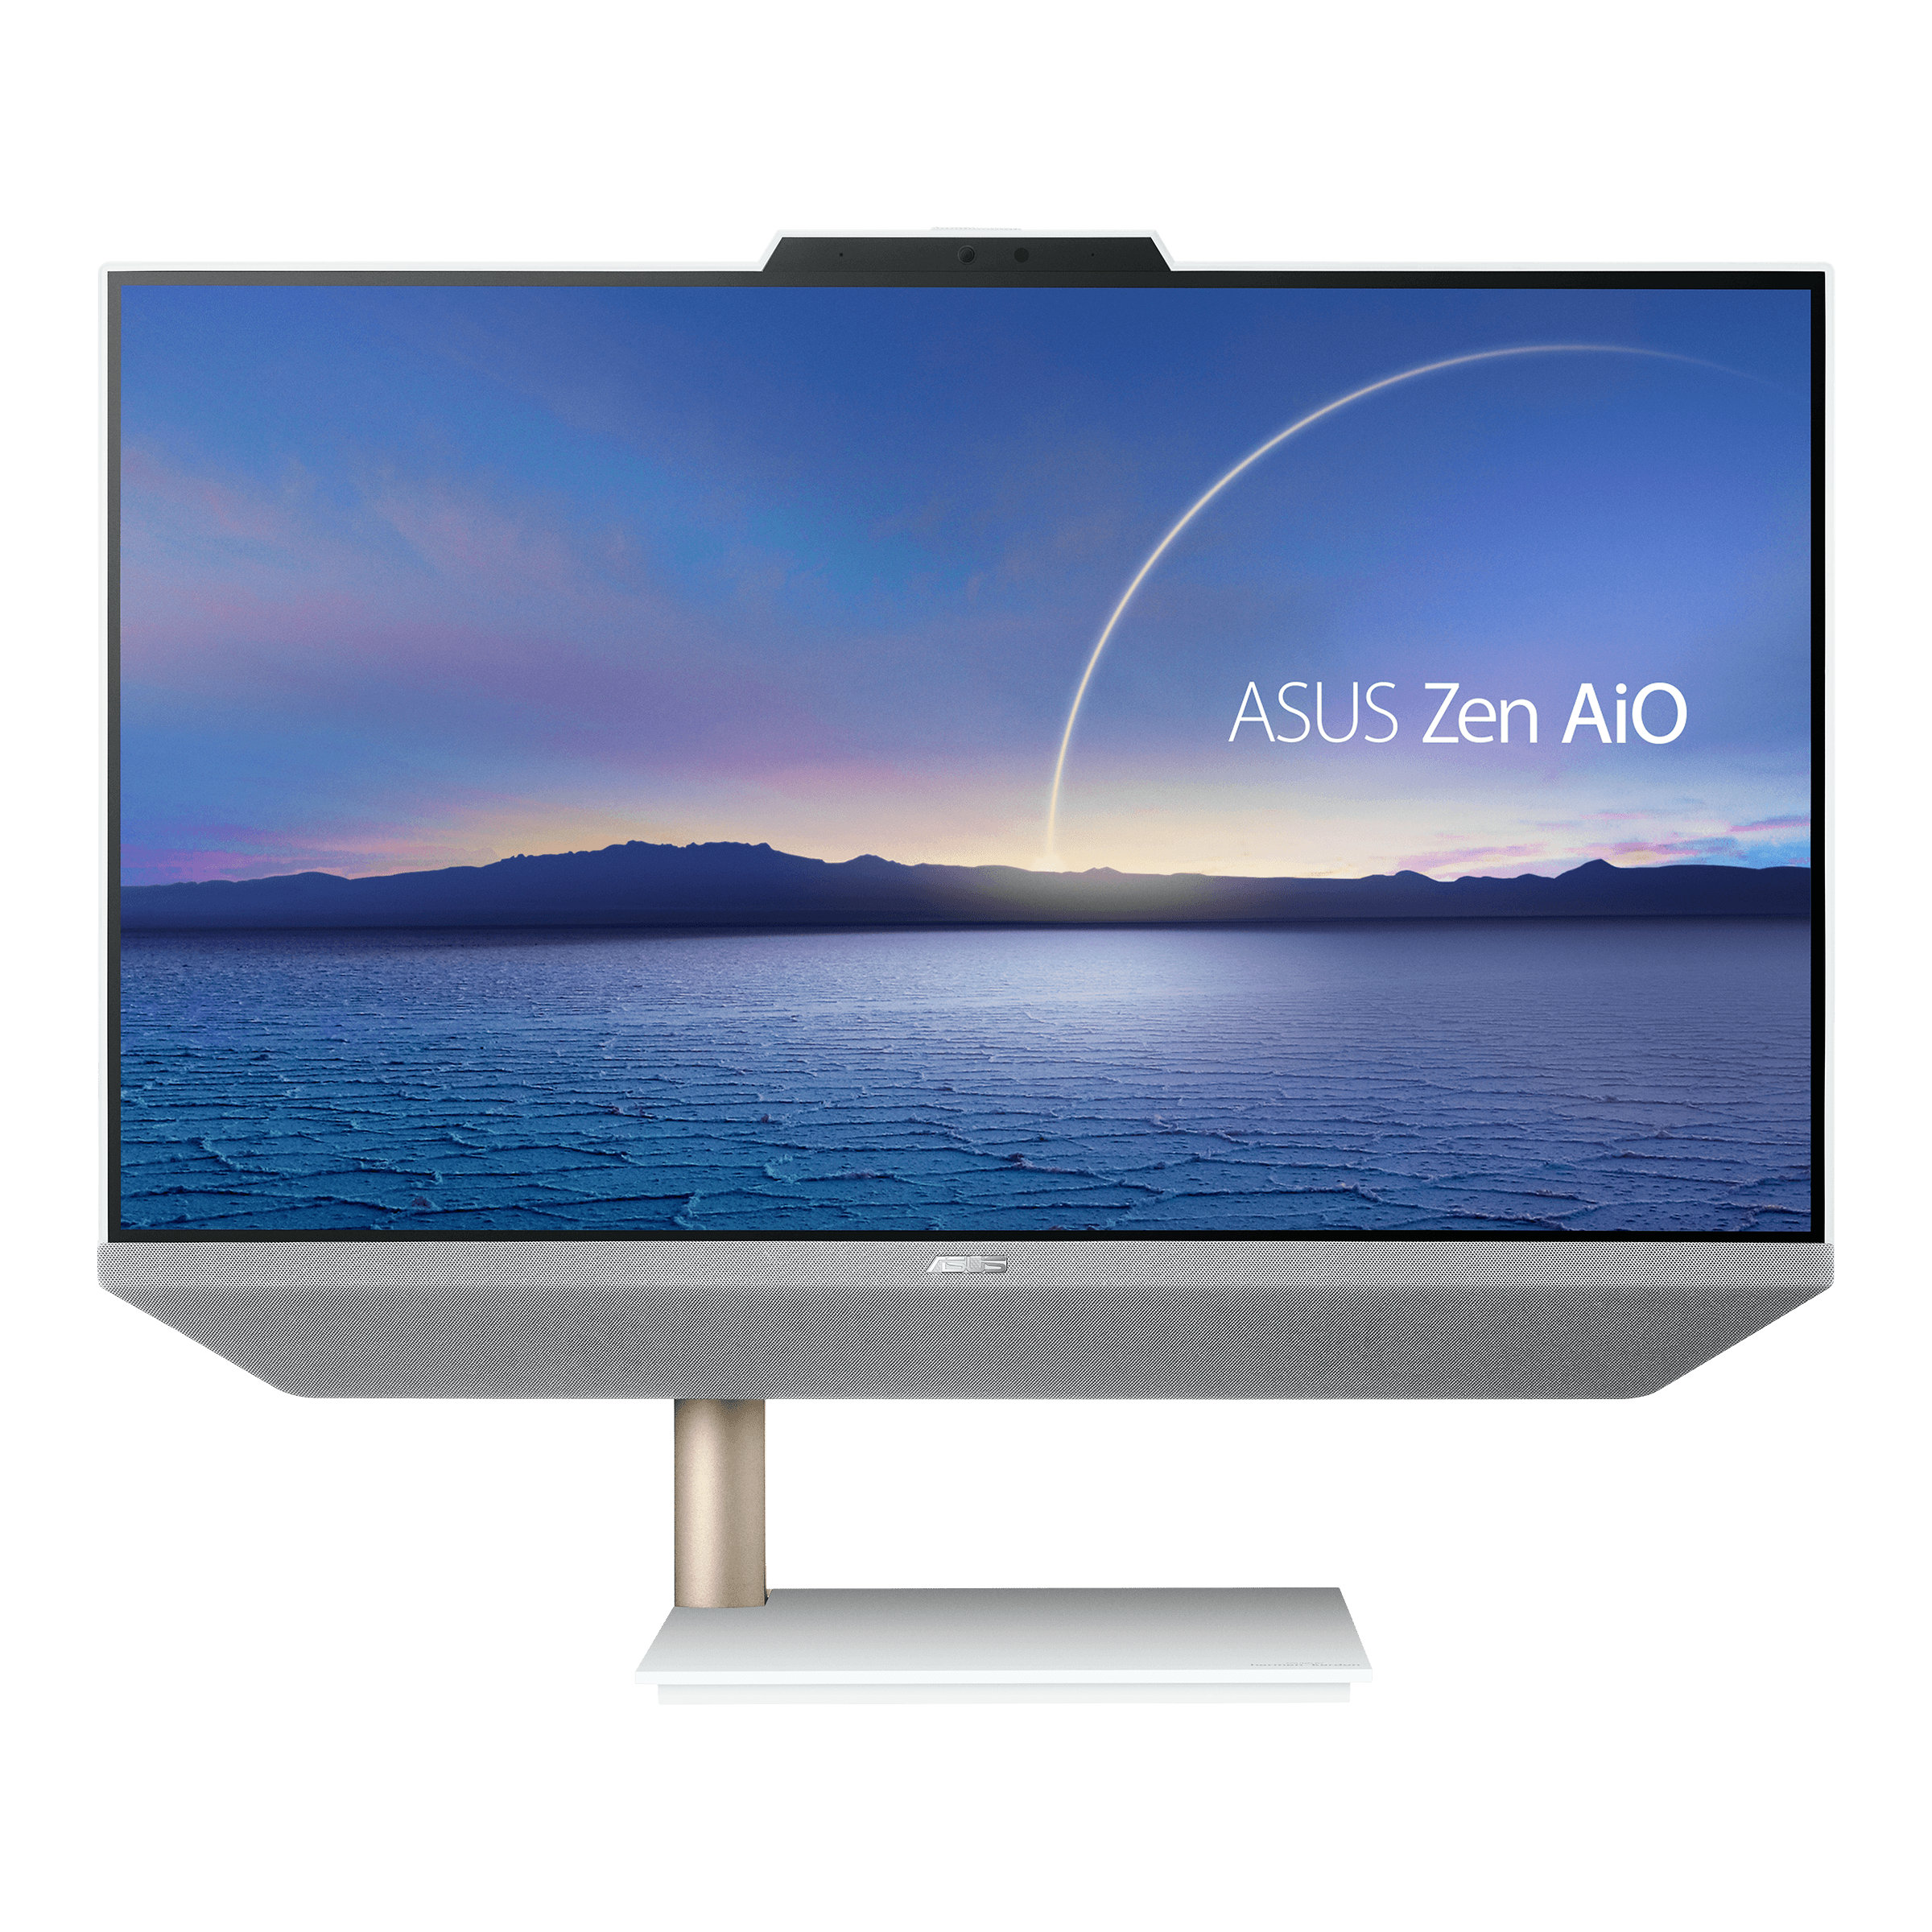 ASUS Zen AiO-24, 23.8" All-in-One Touch Desktop